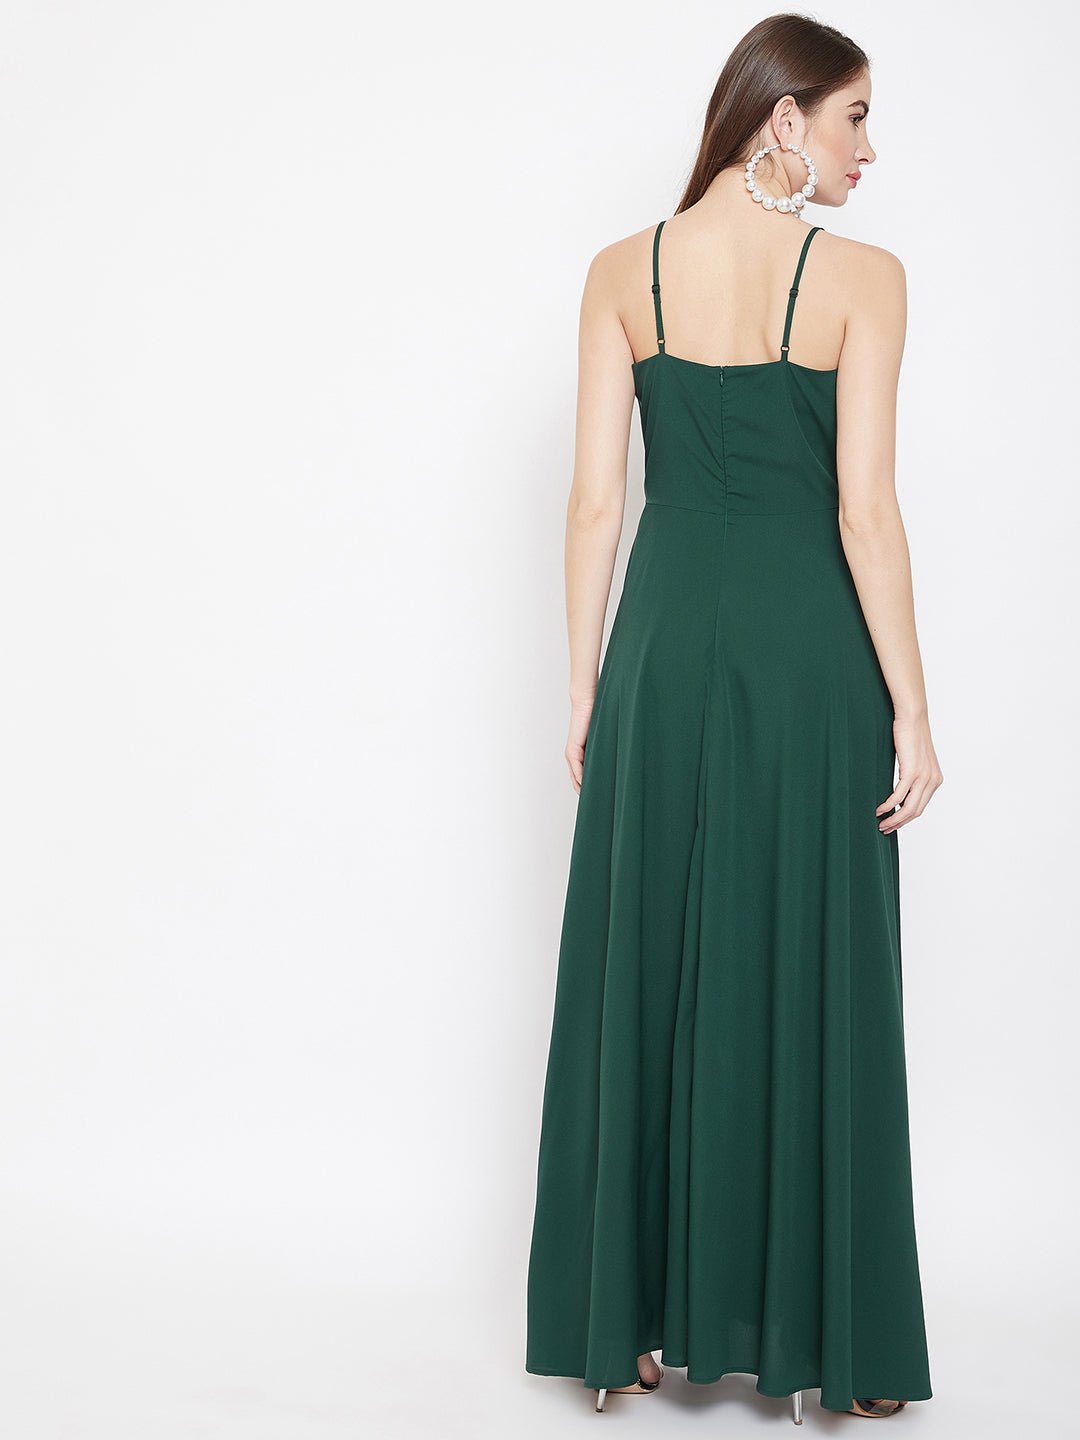 Folk Republic Women Solid Green V-Neck Sleeveless Crepe Thigh-High Slit A-Line Maxi Dress - #folk republic#